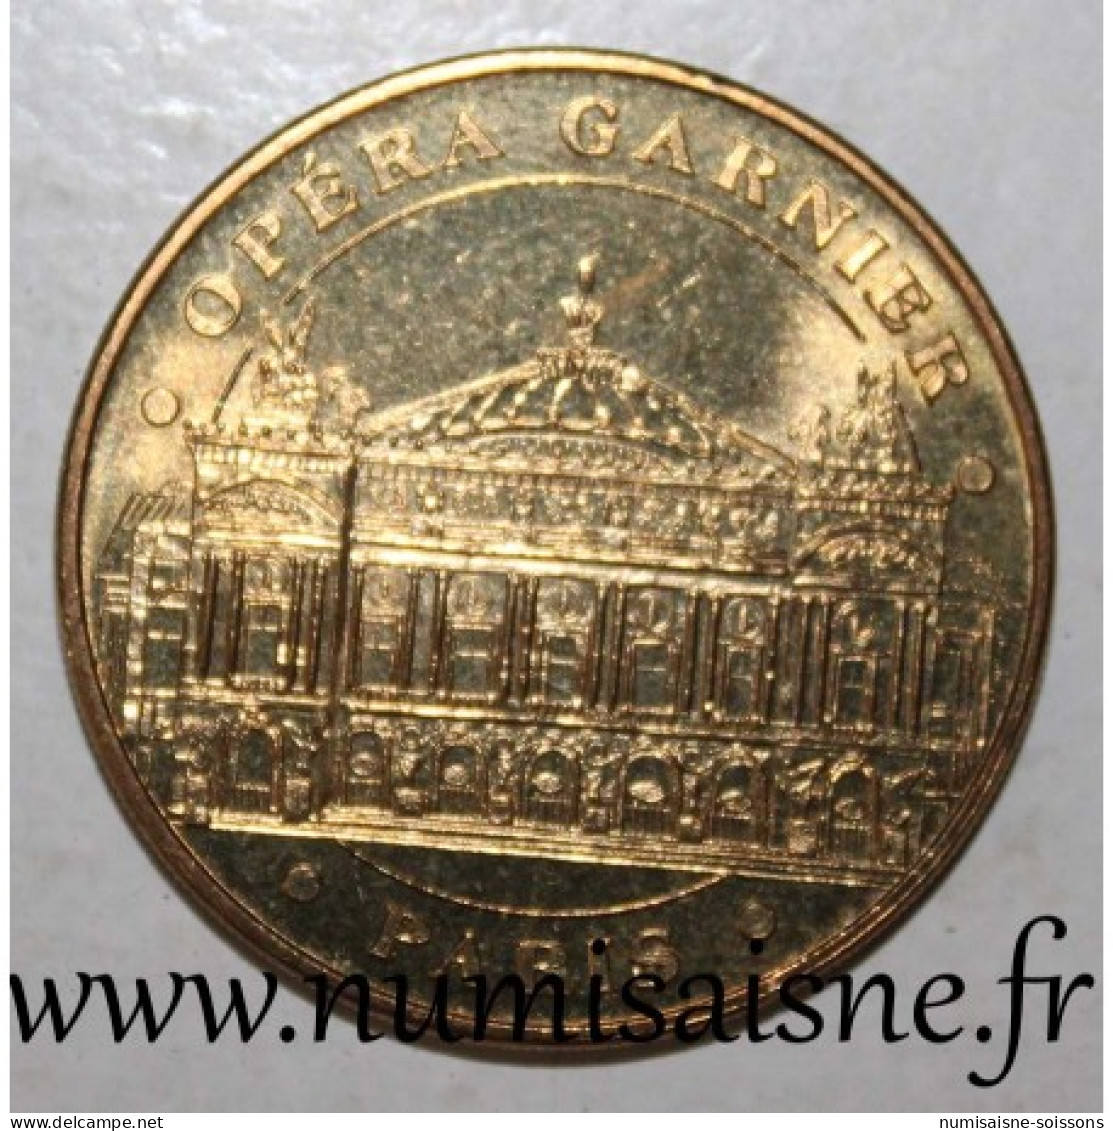 75 - PARIS - OPÉRA GARNIER - Monnaie De Paris - 2013 - 2013